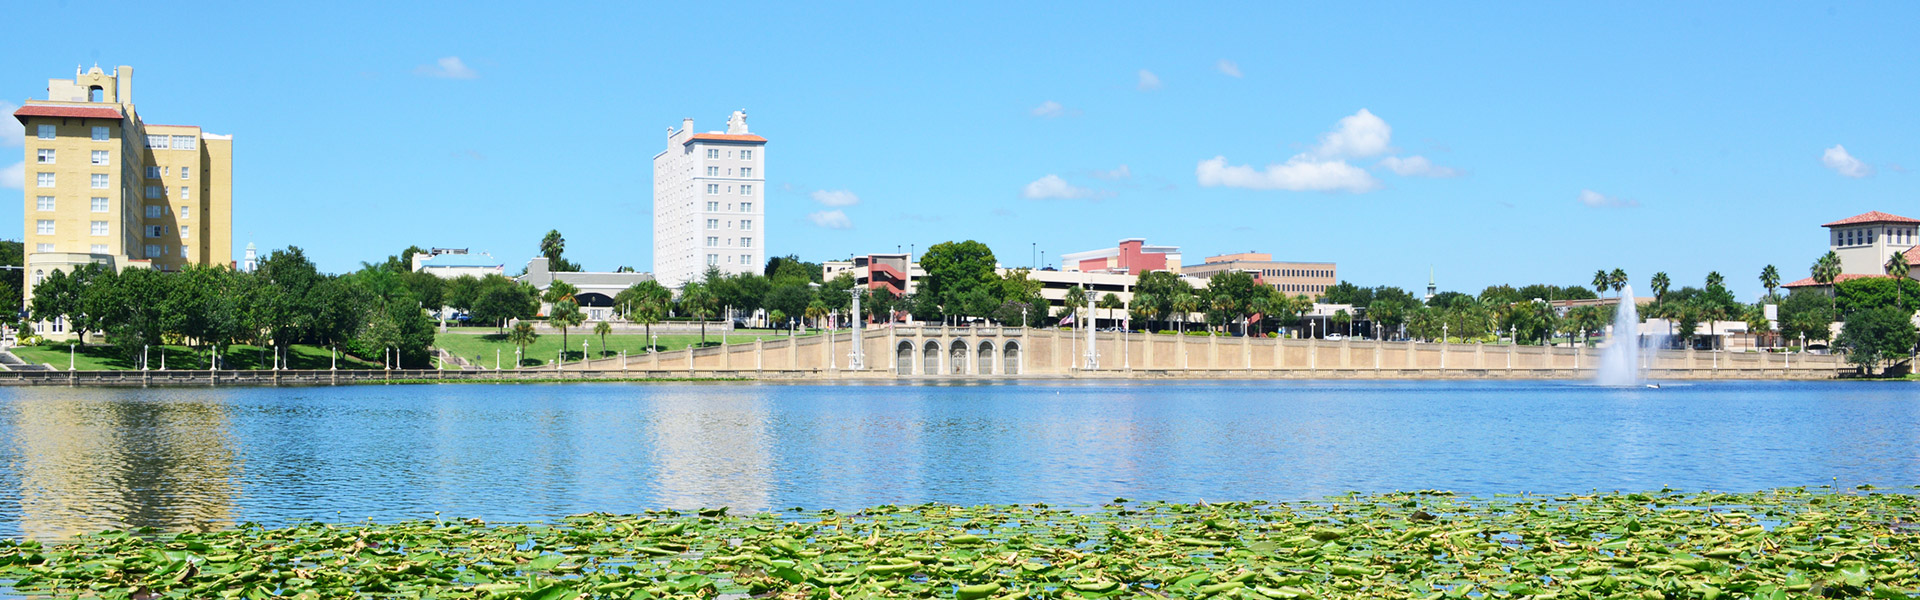 Colleges in Lakeland, Florida - Lakeland Campus - Keiser University